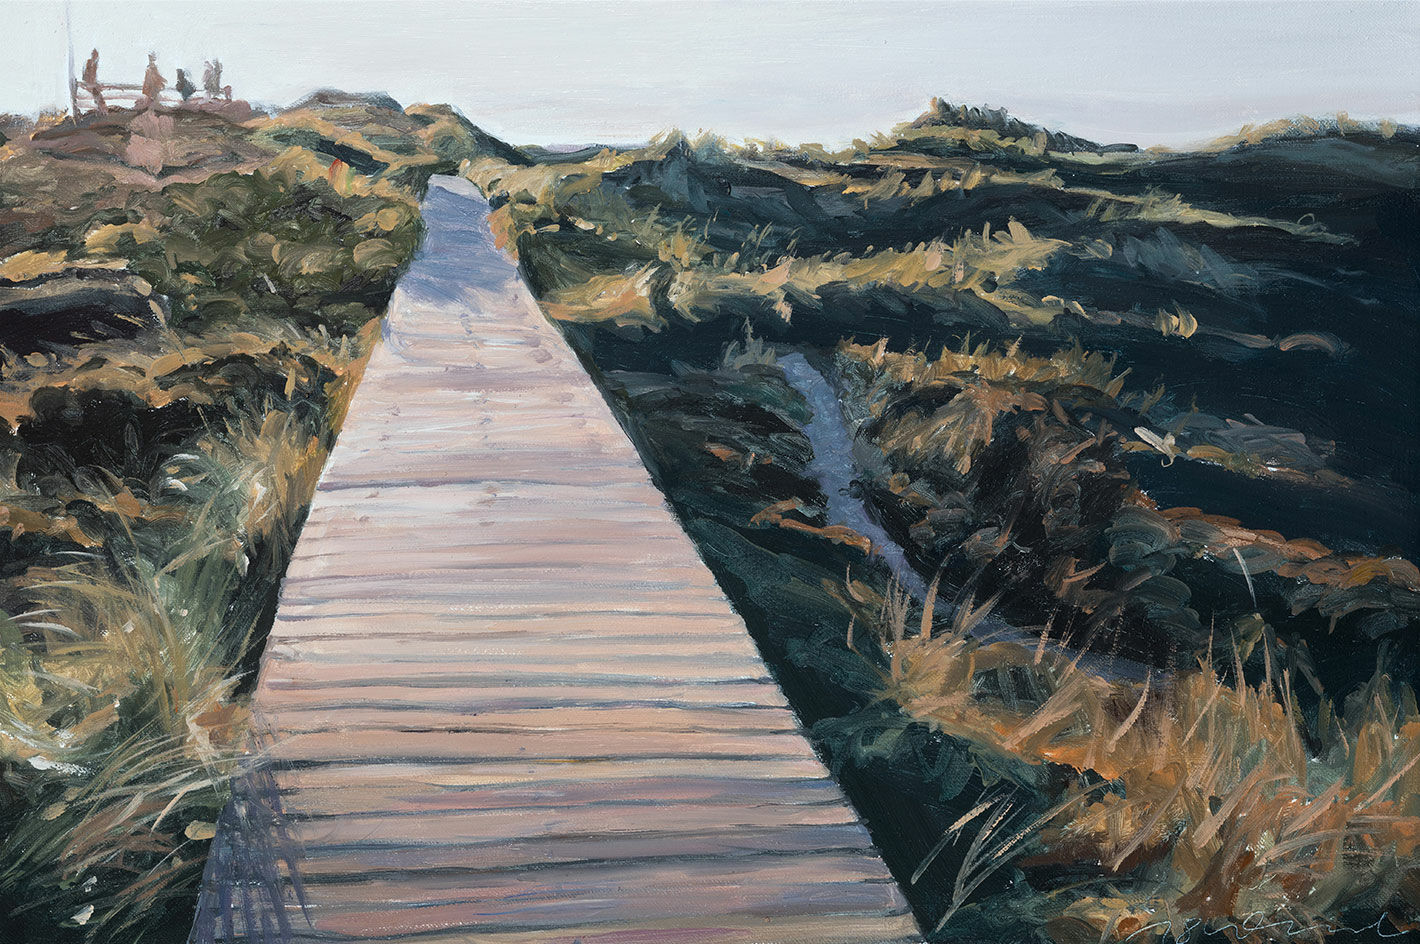 Picture "Boardwalk" (2018) (Original / Unique piece), on stretcher frame by Susanne Wind